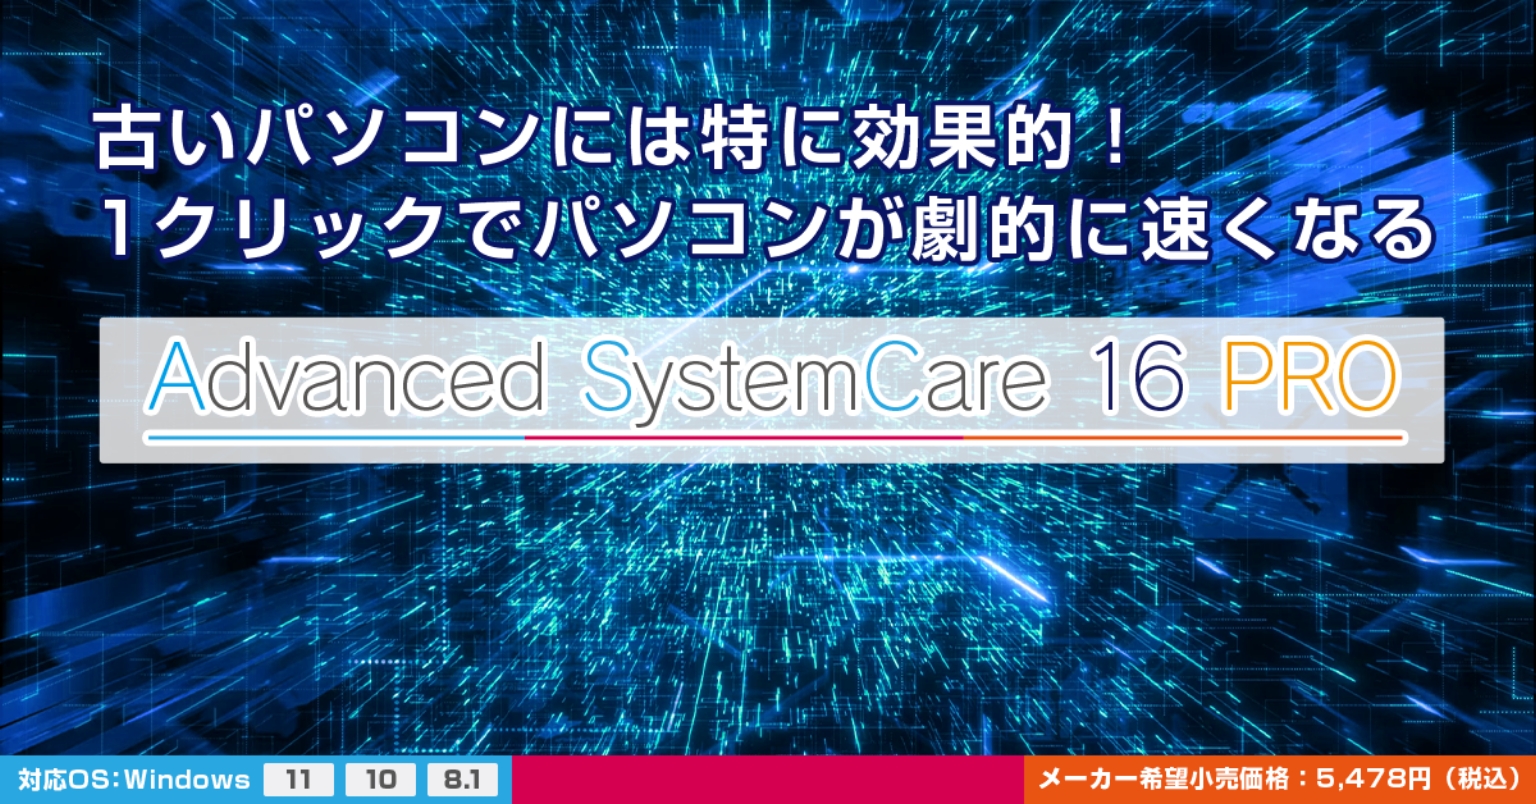 Advanced SystemCare 16 PRO